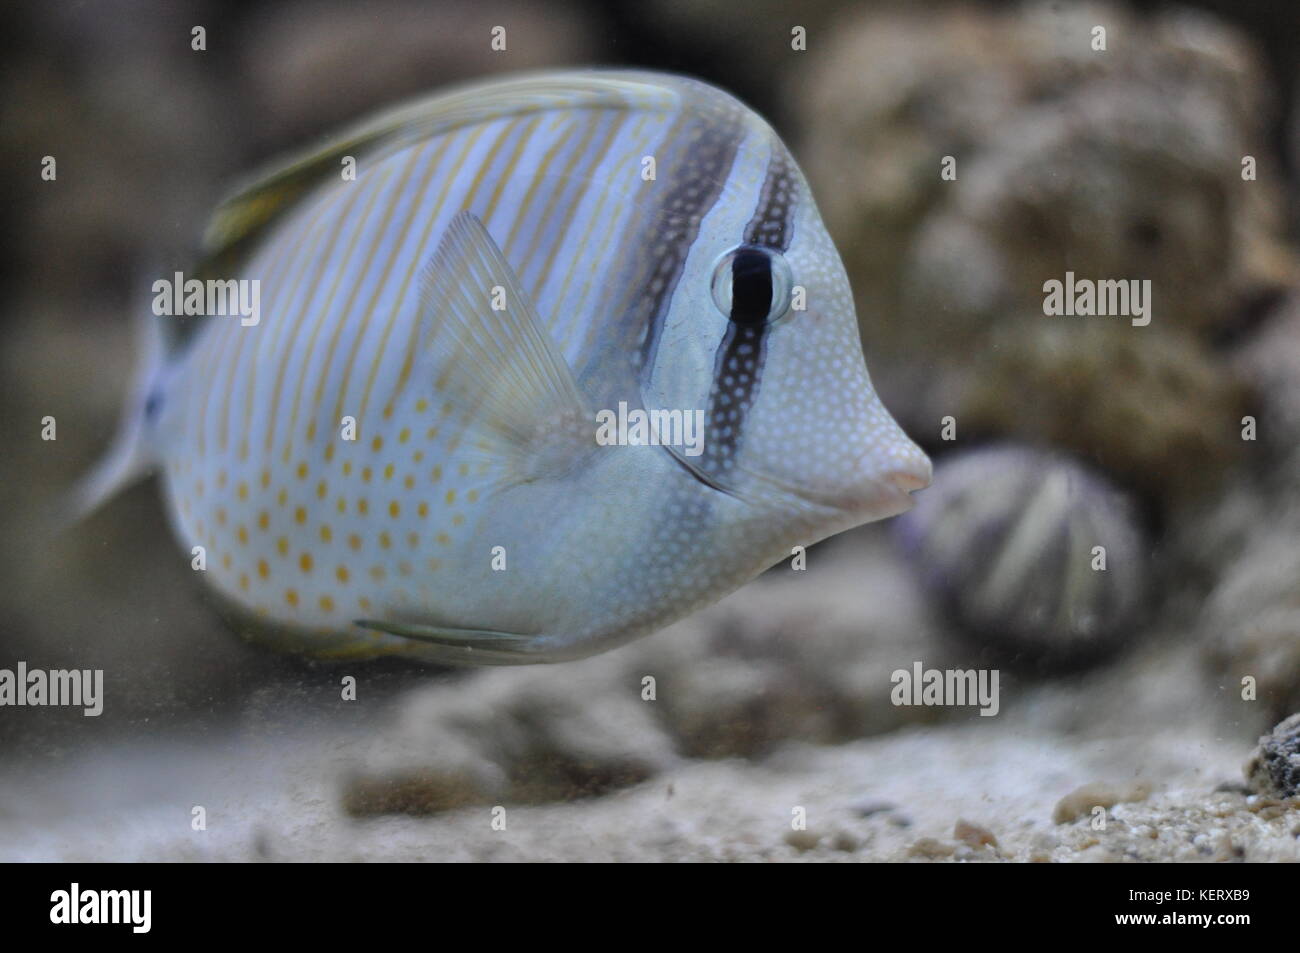 Marine fishes - Sailfin Tang - Surgeon fish Stock Photo